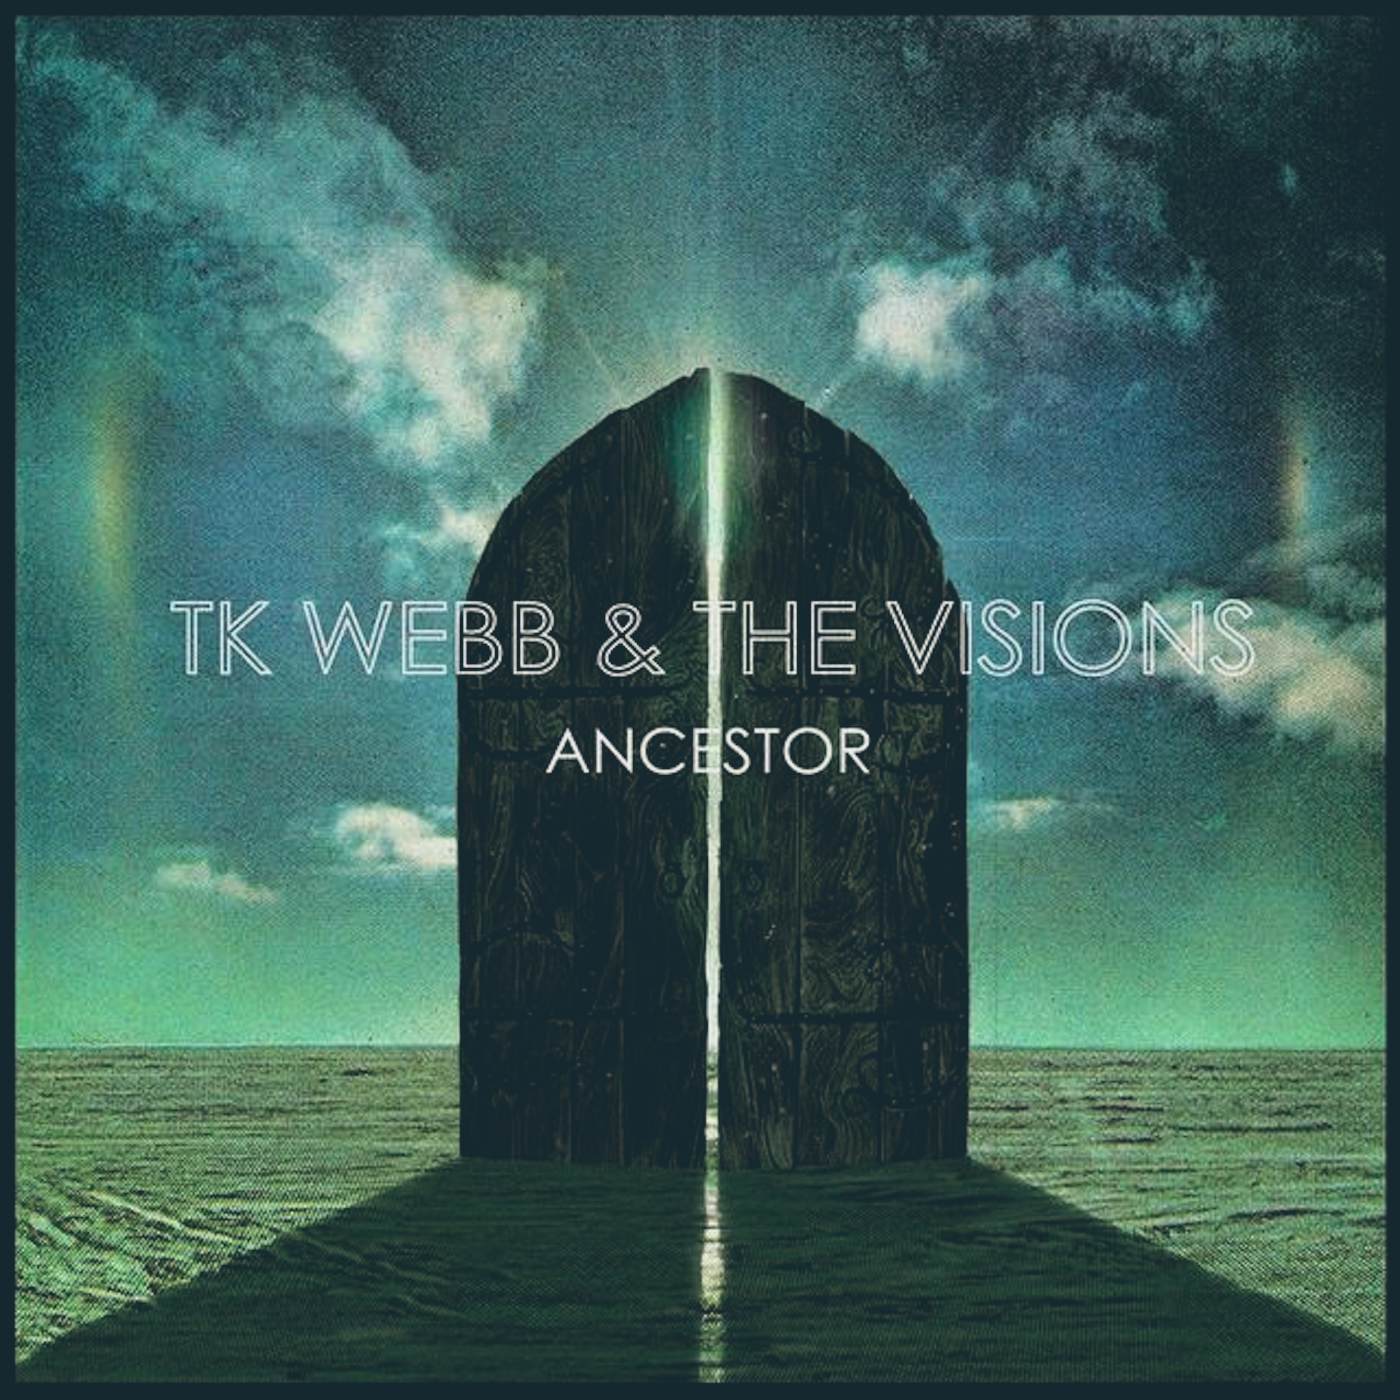 TK Webb & The Visions